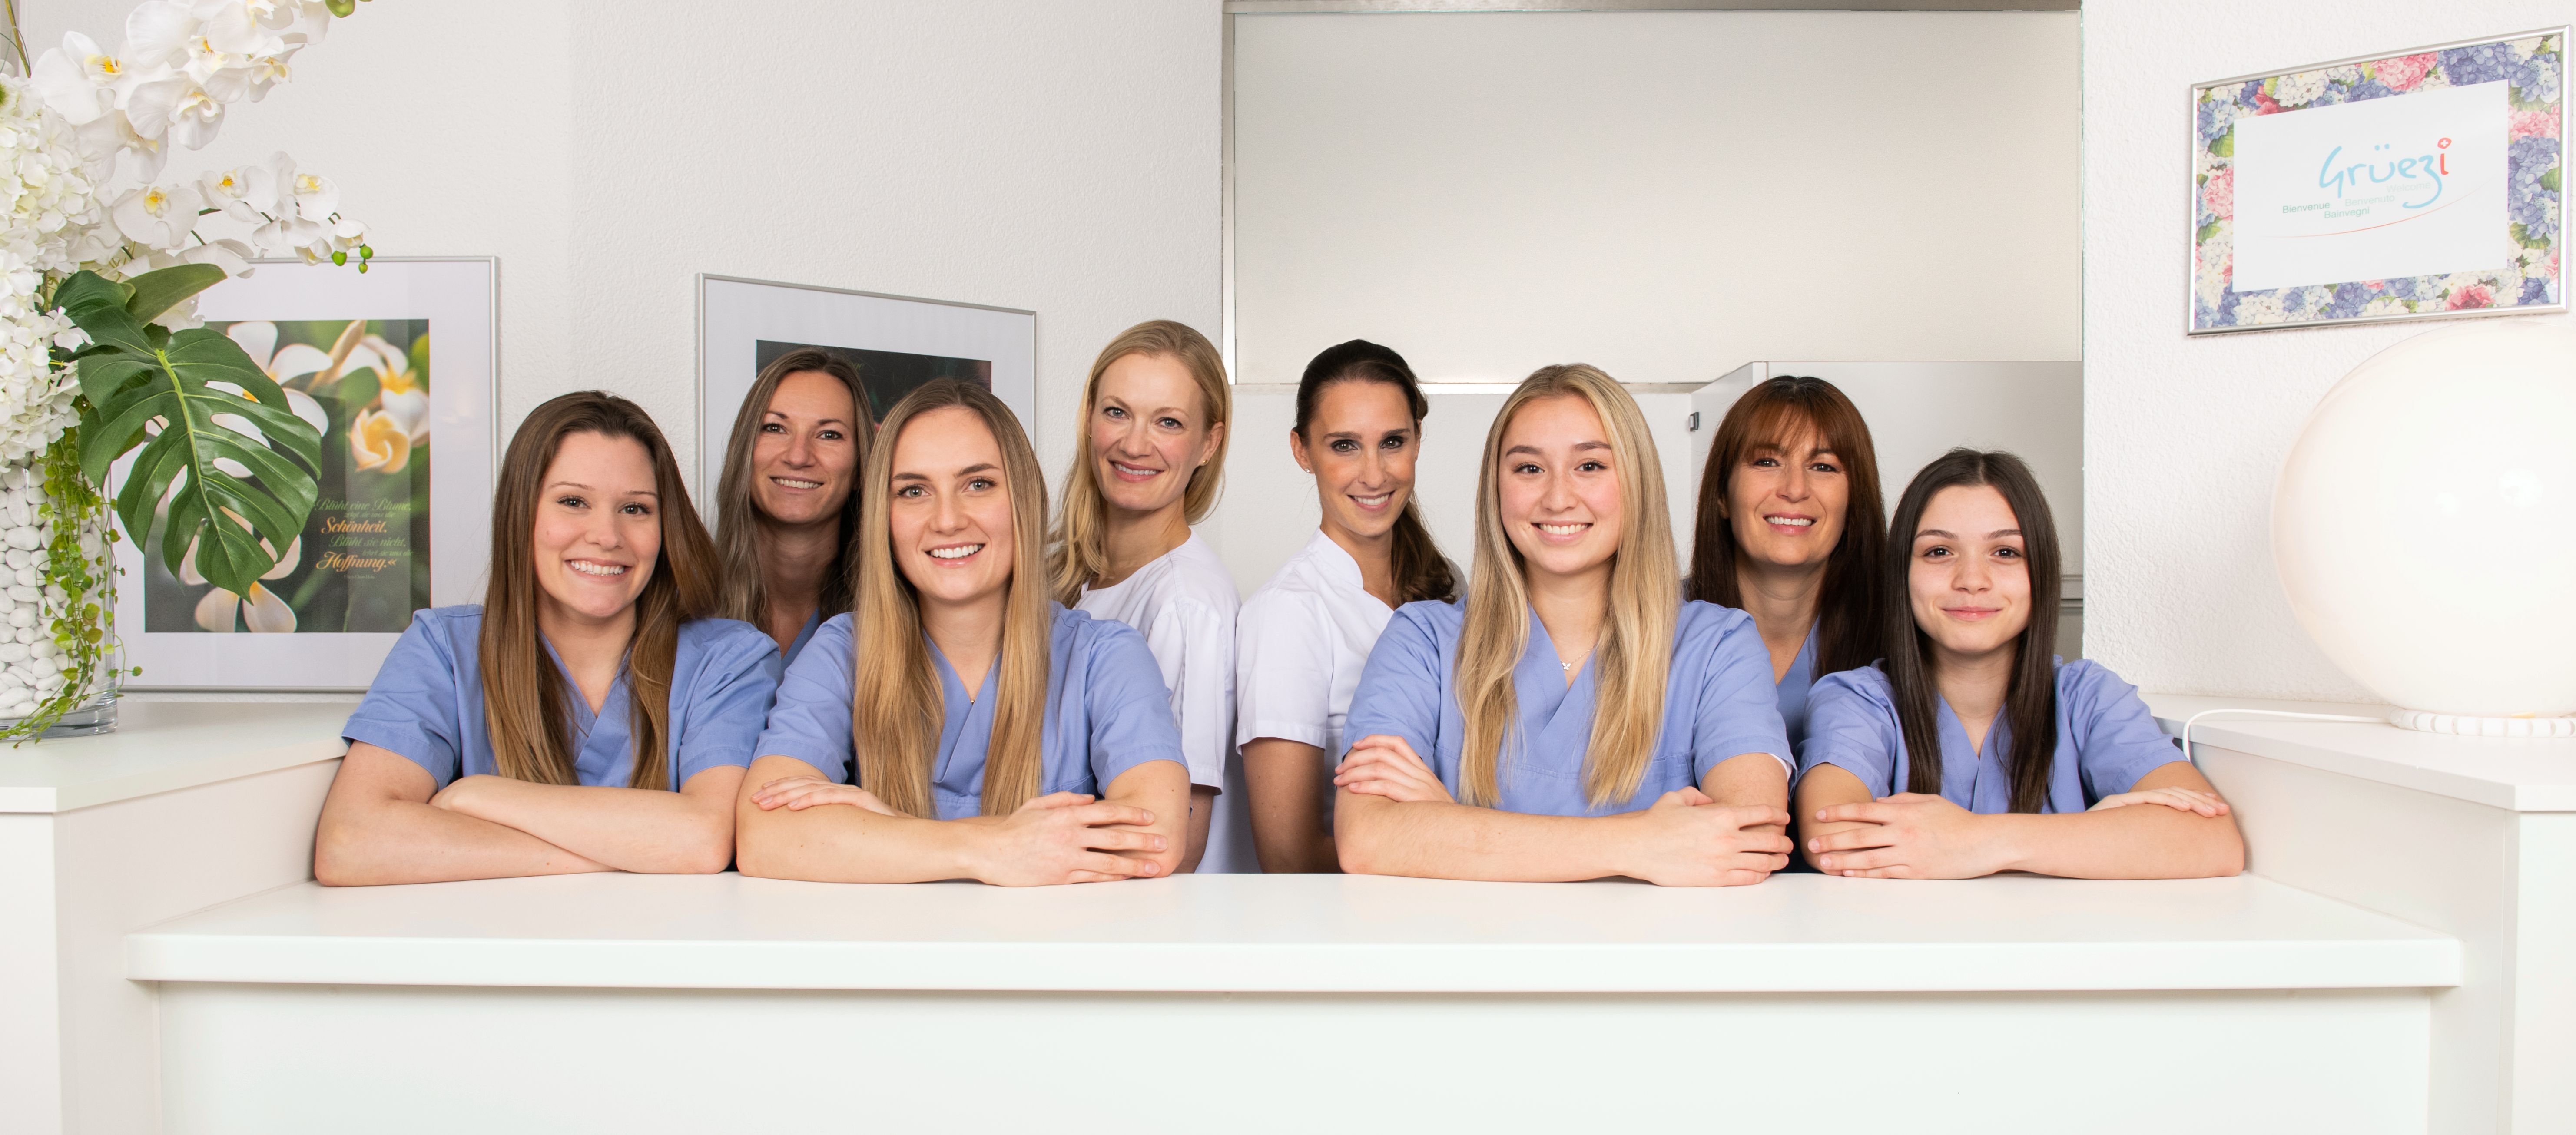 Unser Zahnarztpraxis-Team in Wollerau: Zahnärztinnen Dr. med. dent. Viola Kessler, Dr. med. dent. Alexandra Credé, Dentalhygienikerinnen, Dentalassistentinnen